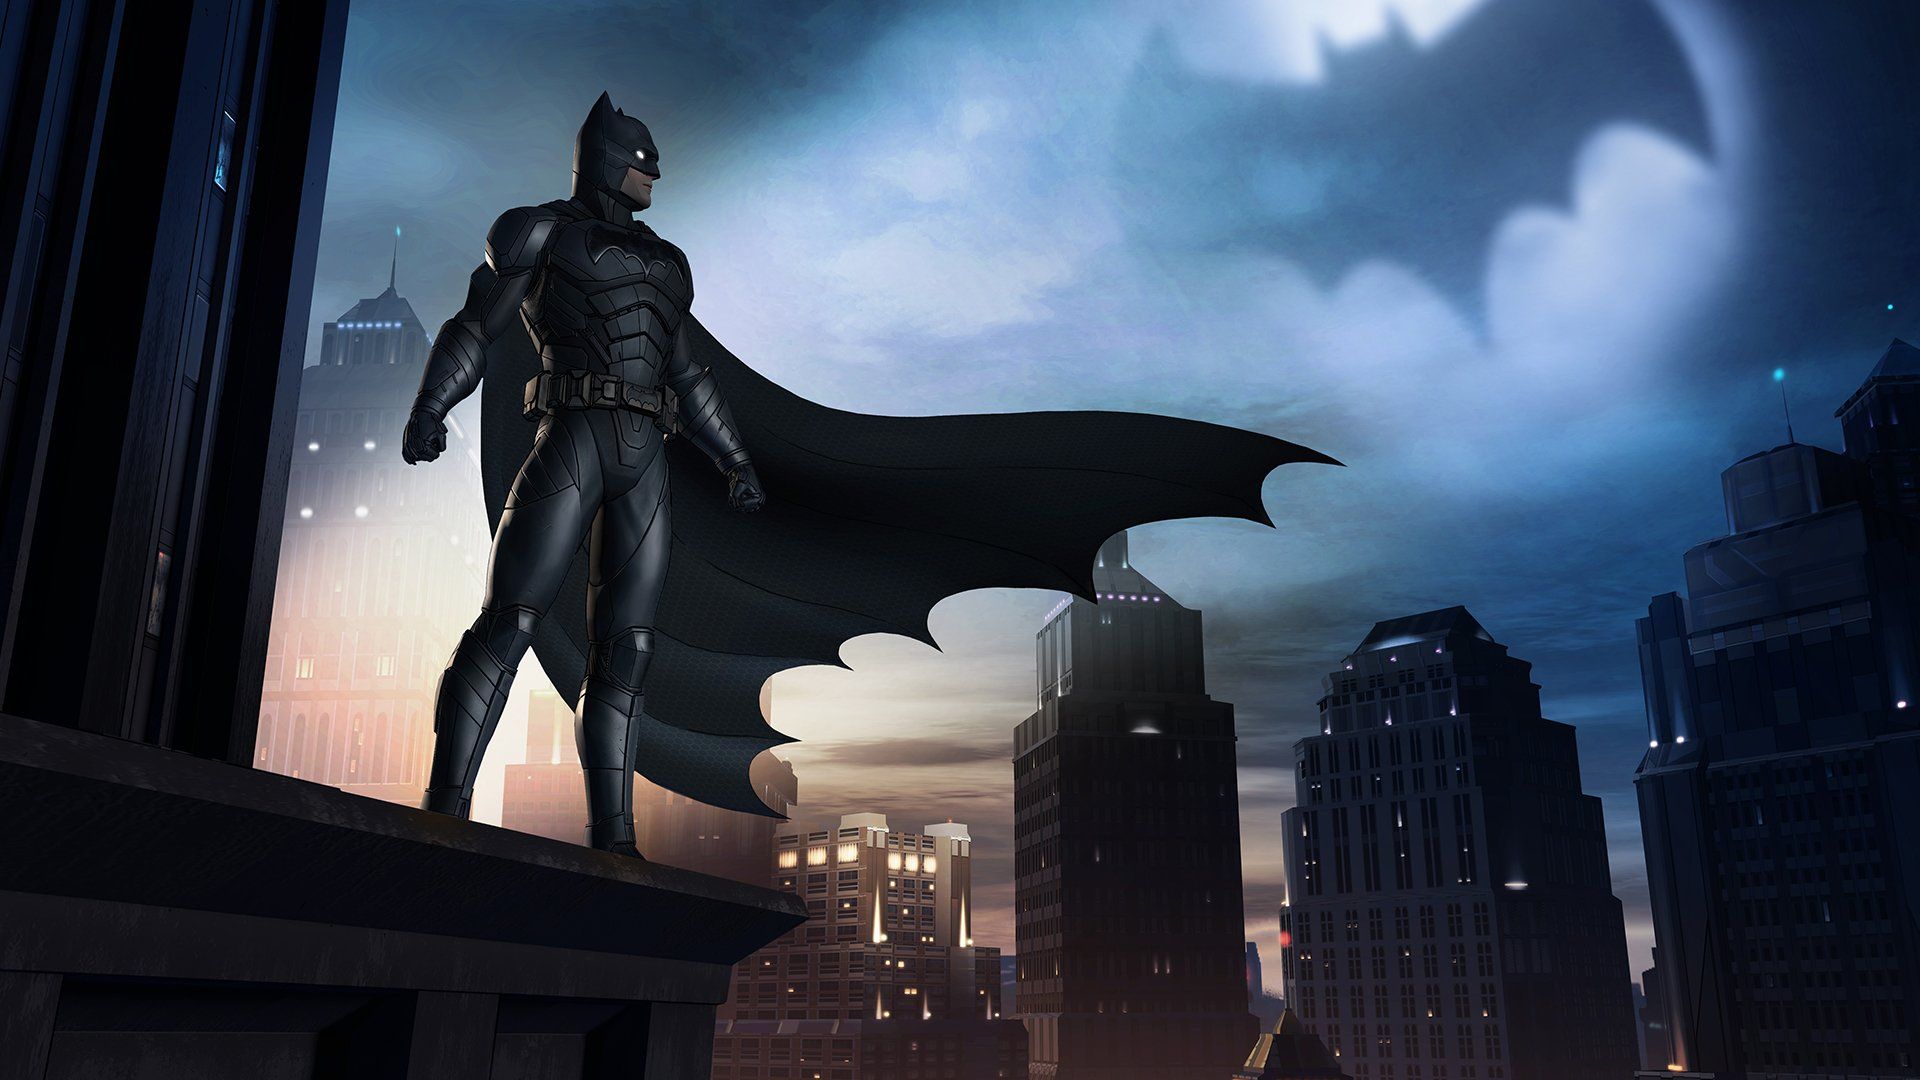 Bat Signal HD Wallpaper And Background Image